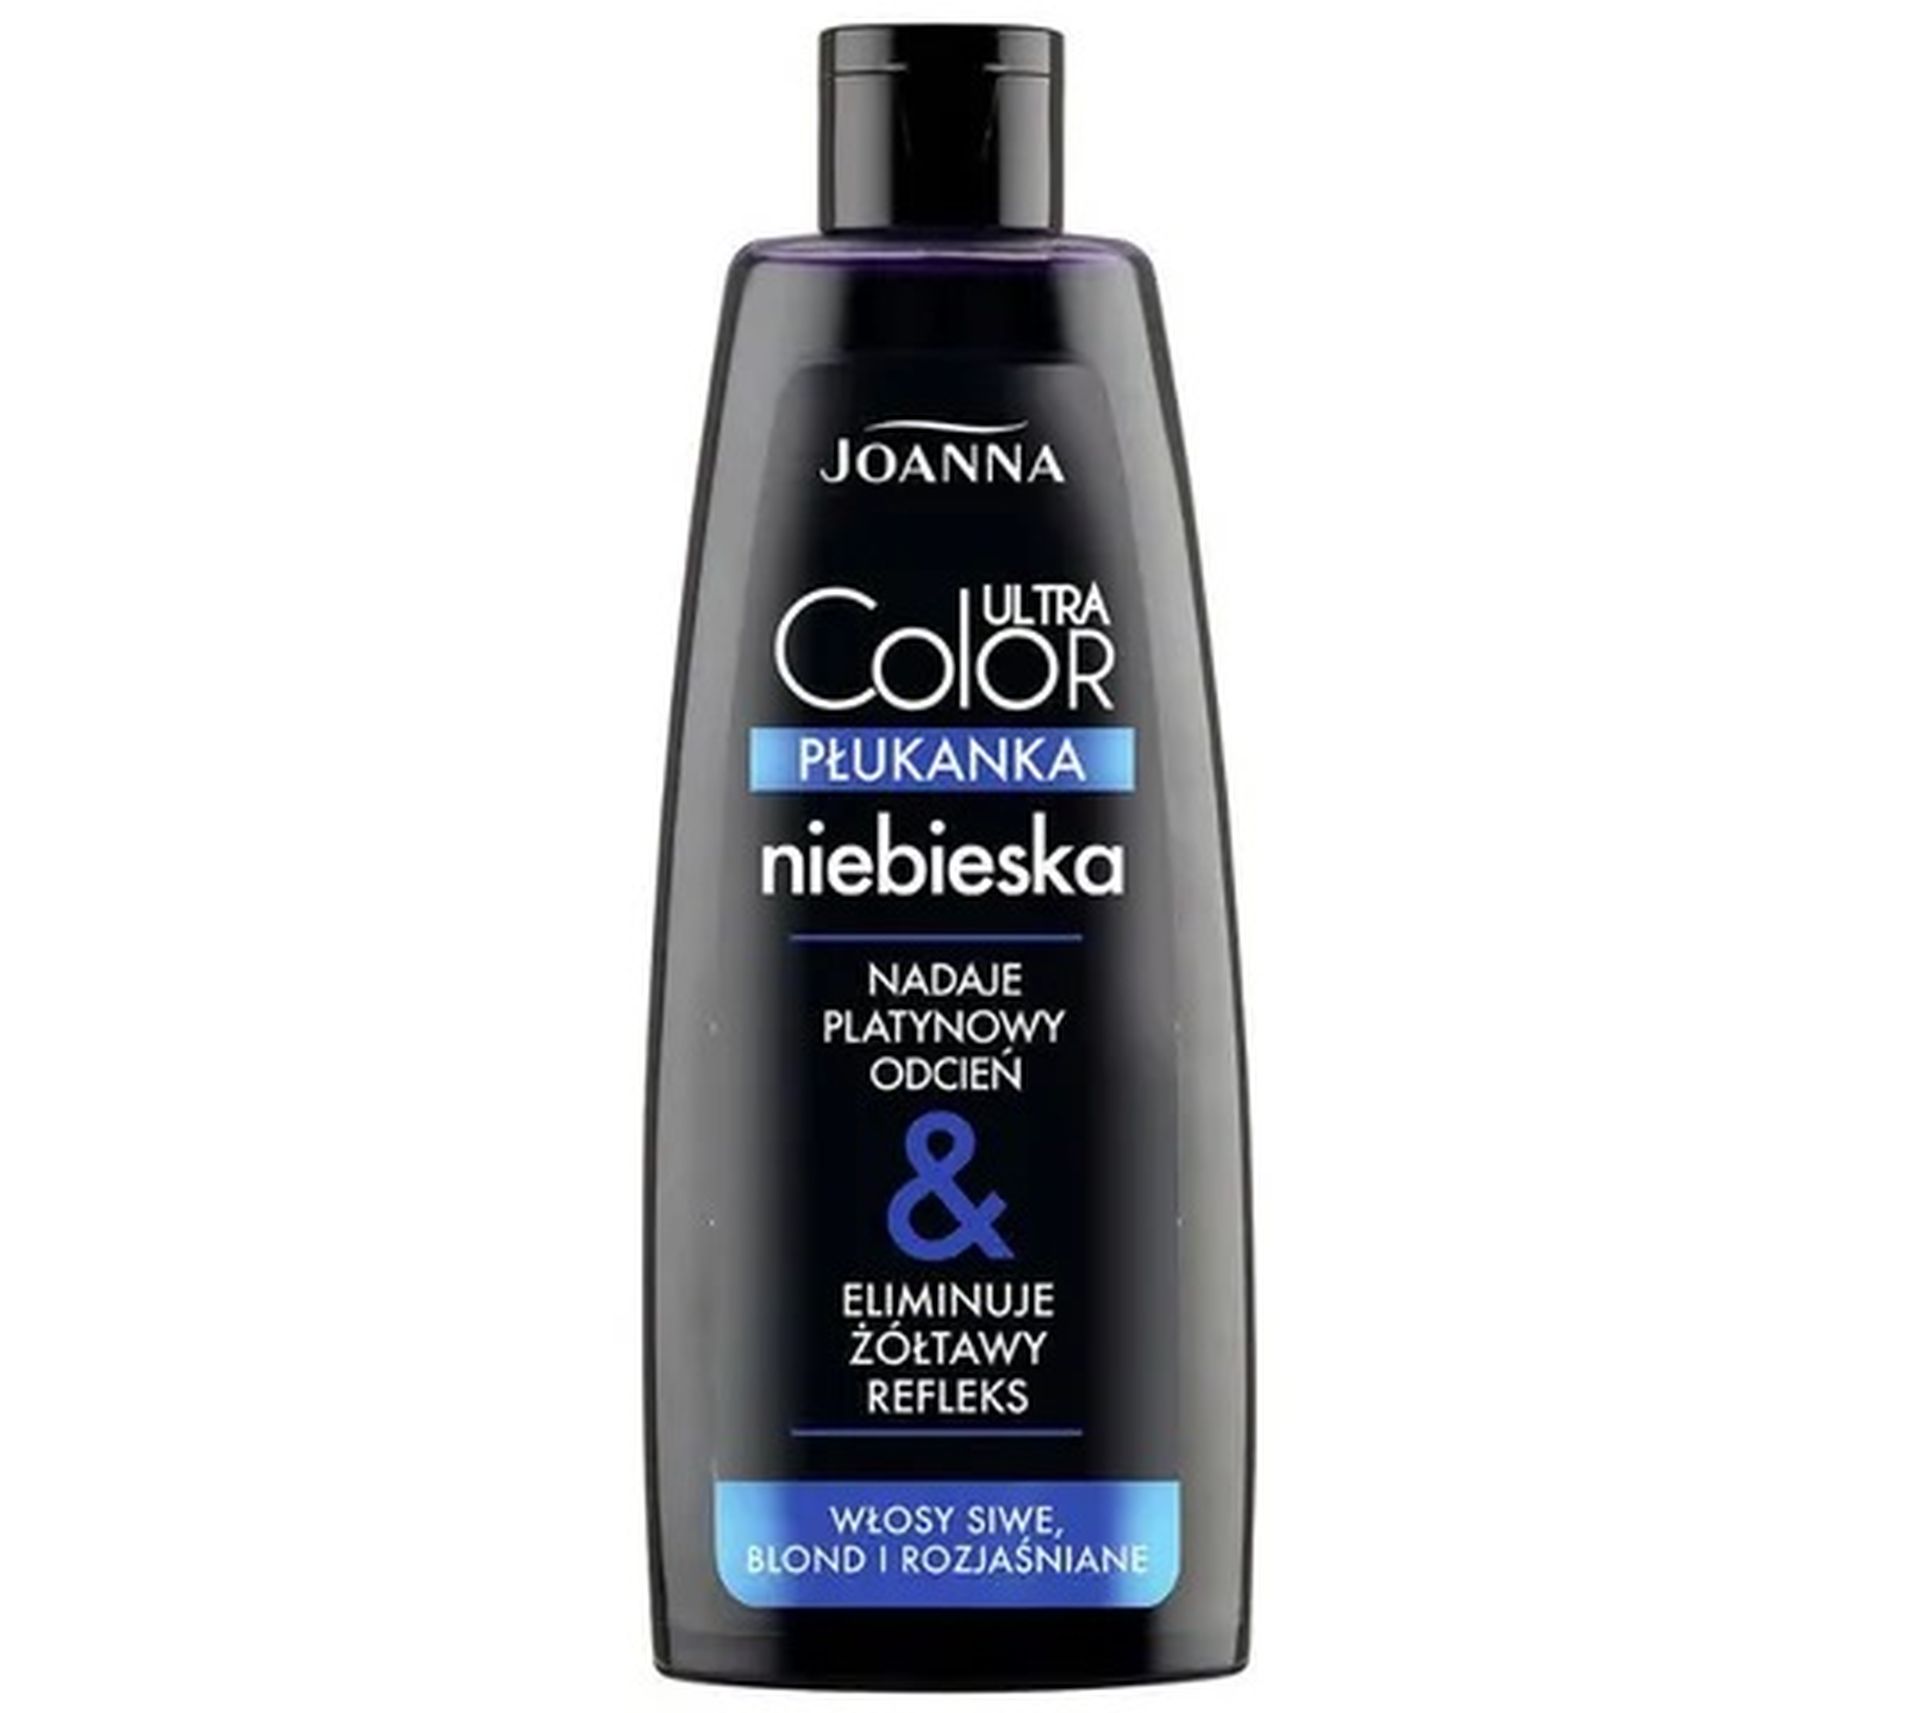 Joanna Ultra Color płukanka do włosów niebieska (150 ml)